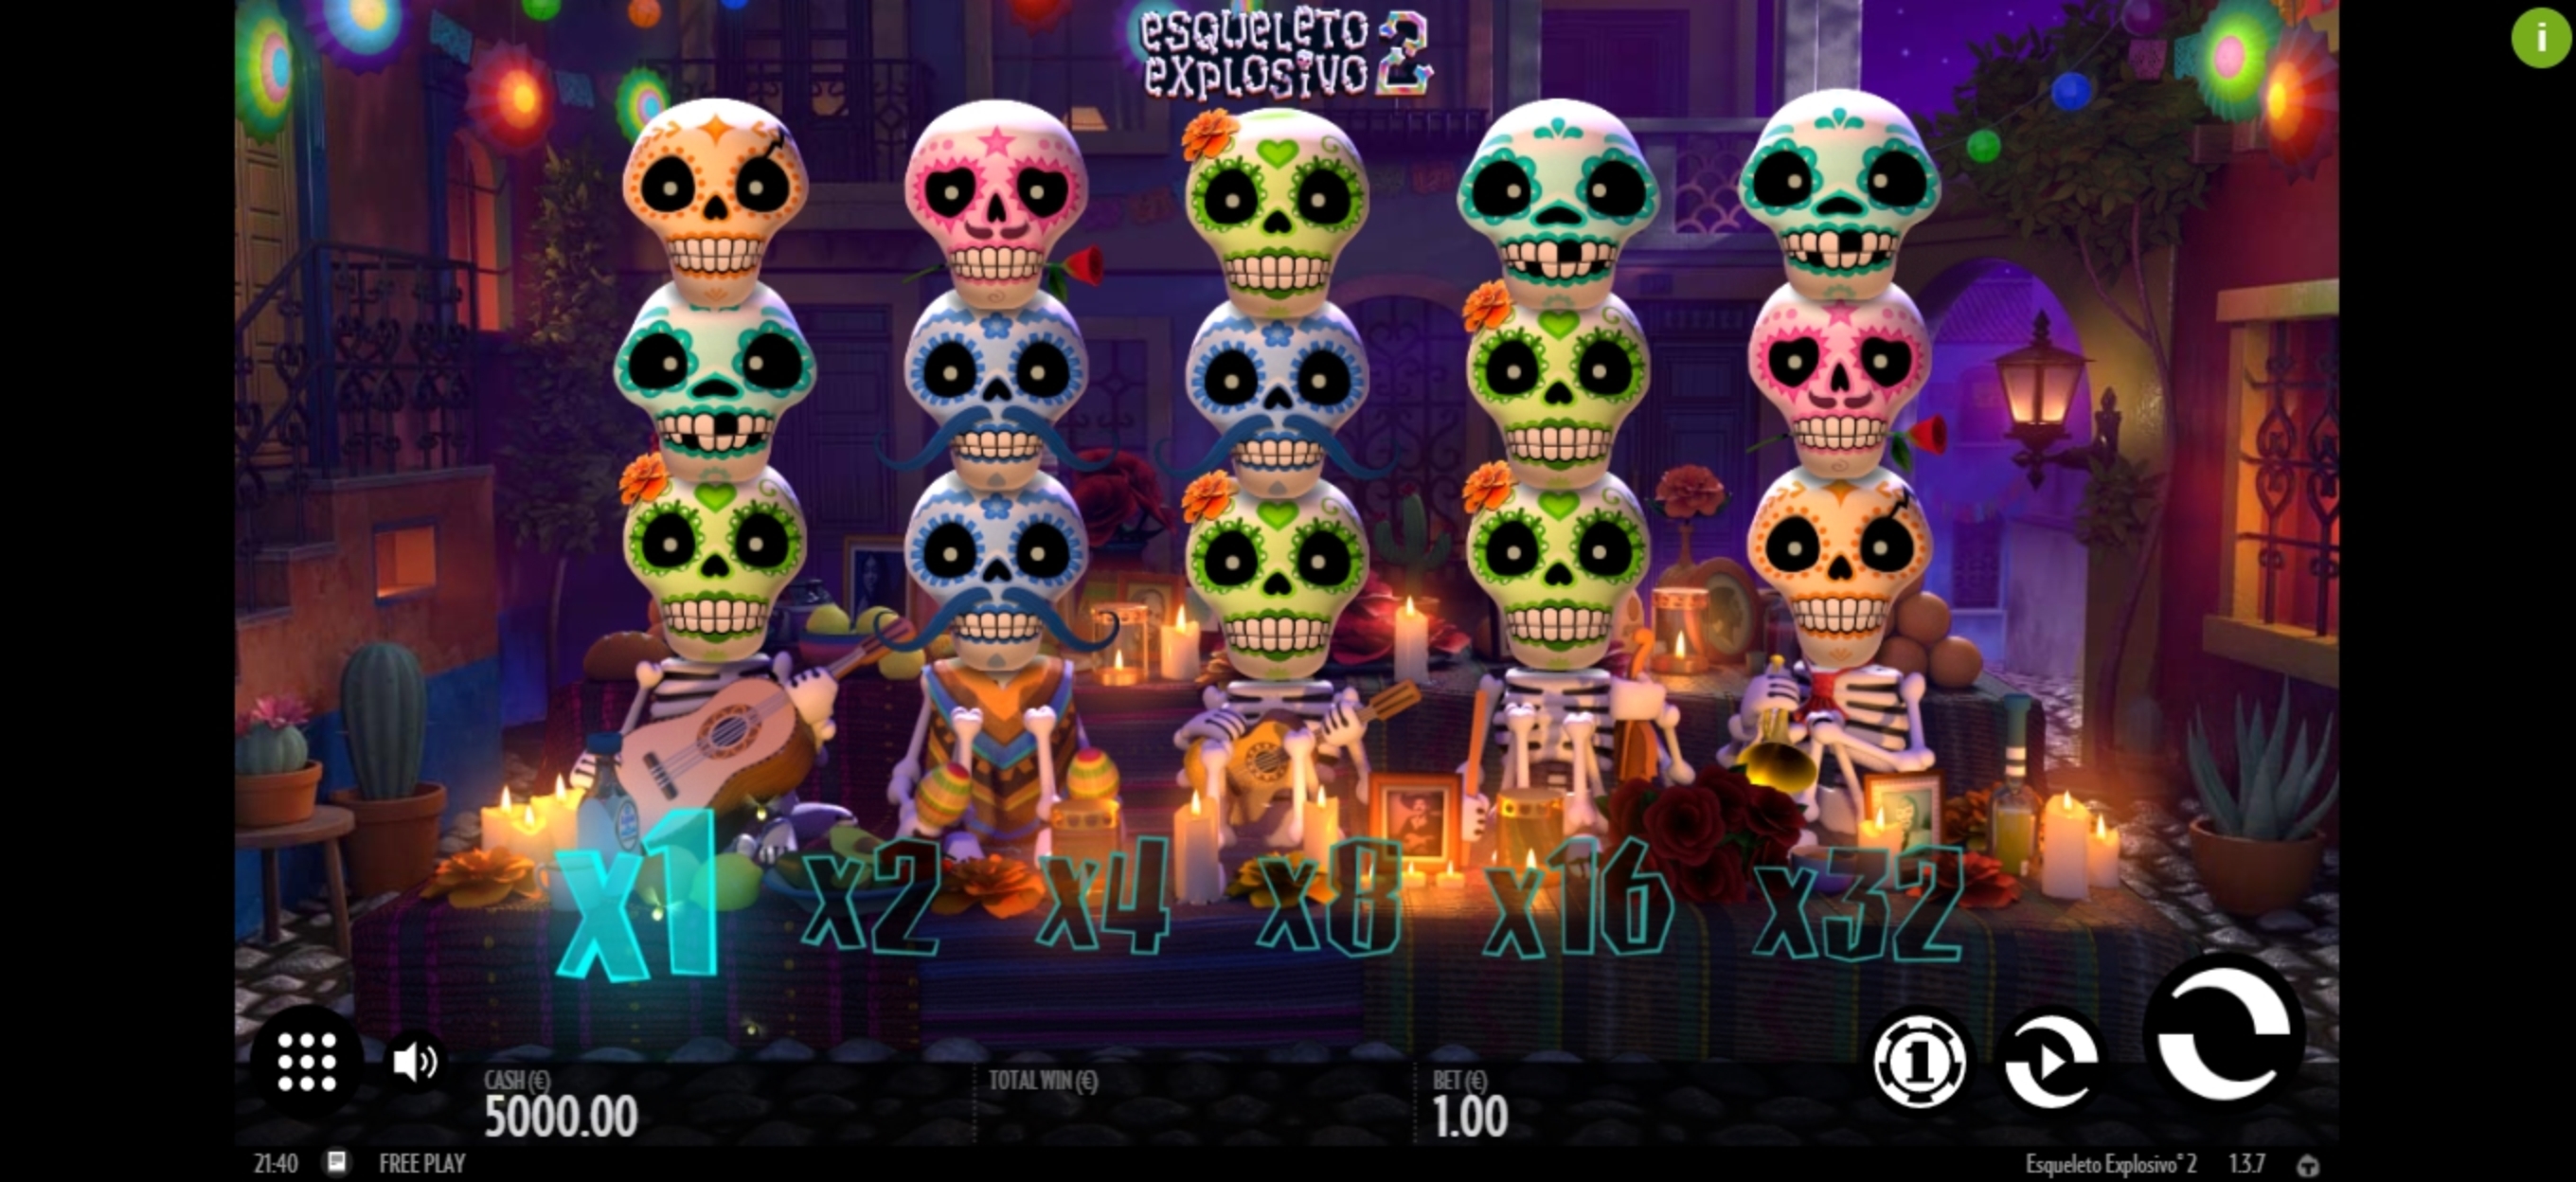 Reels in Esqueleto Explosivo 2 Slot Game by Thunderkick